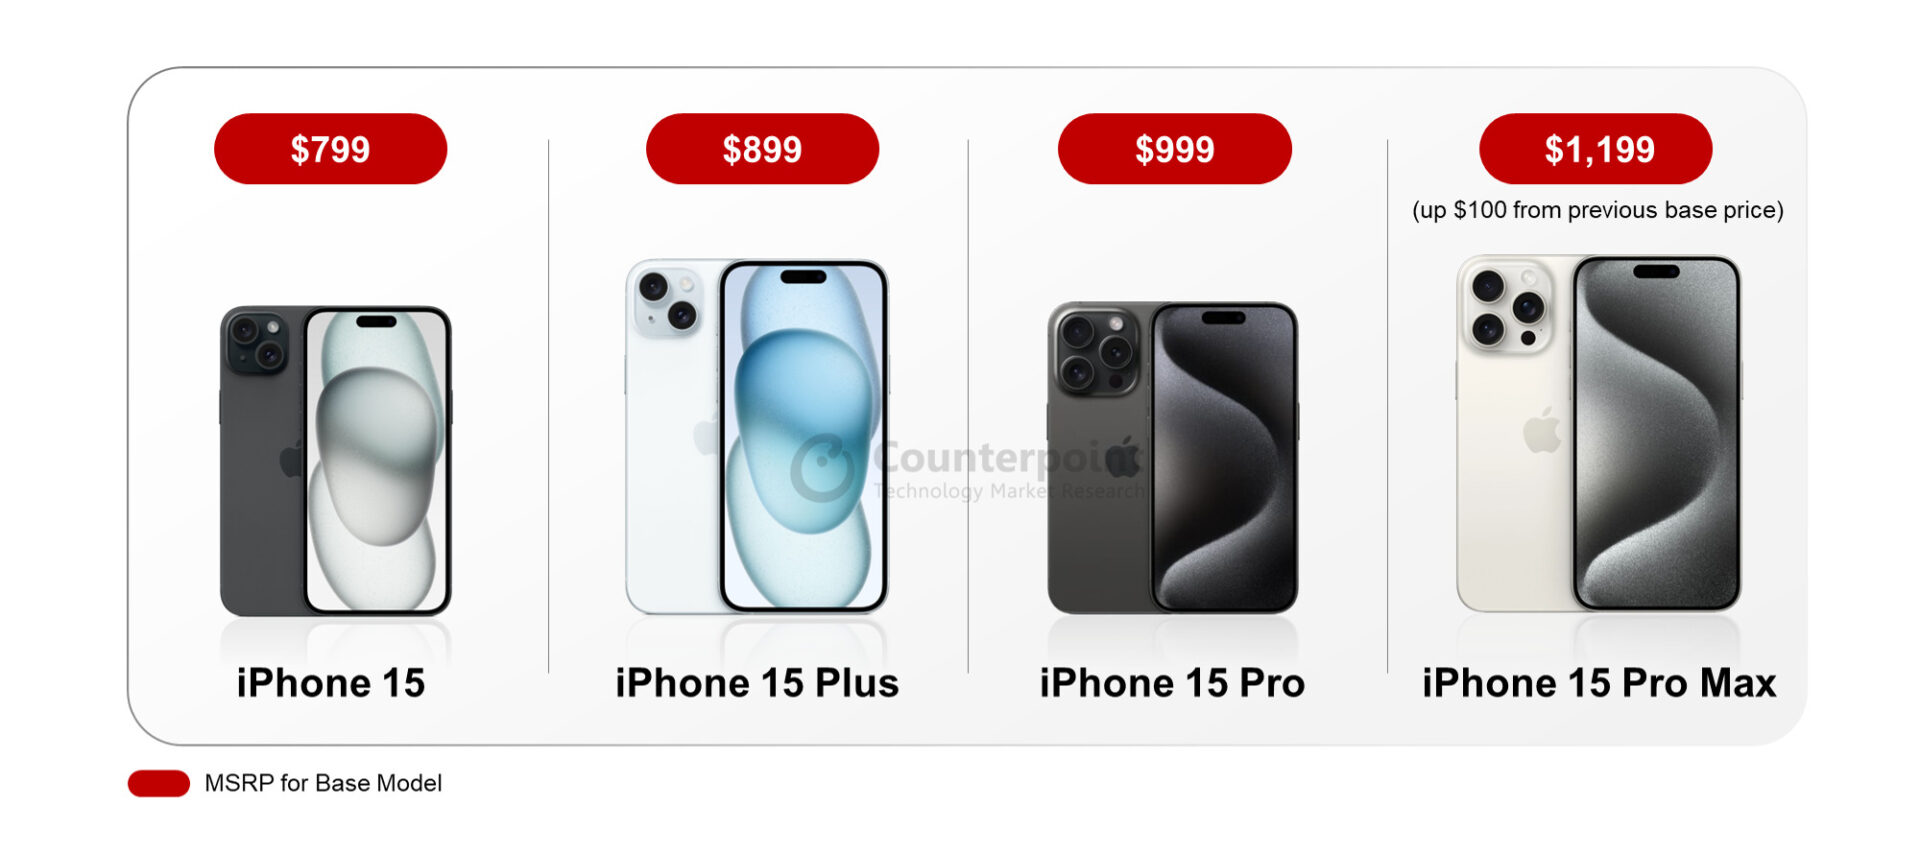 iPhone 15 pricing on Apple.com